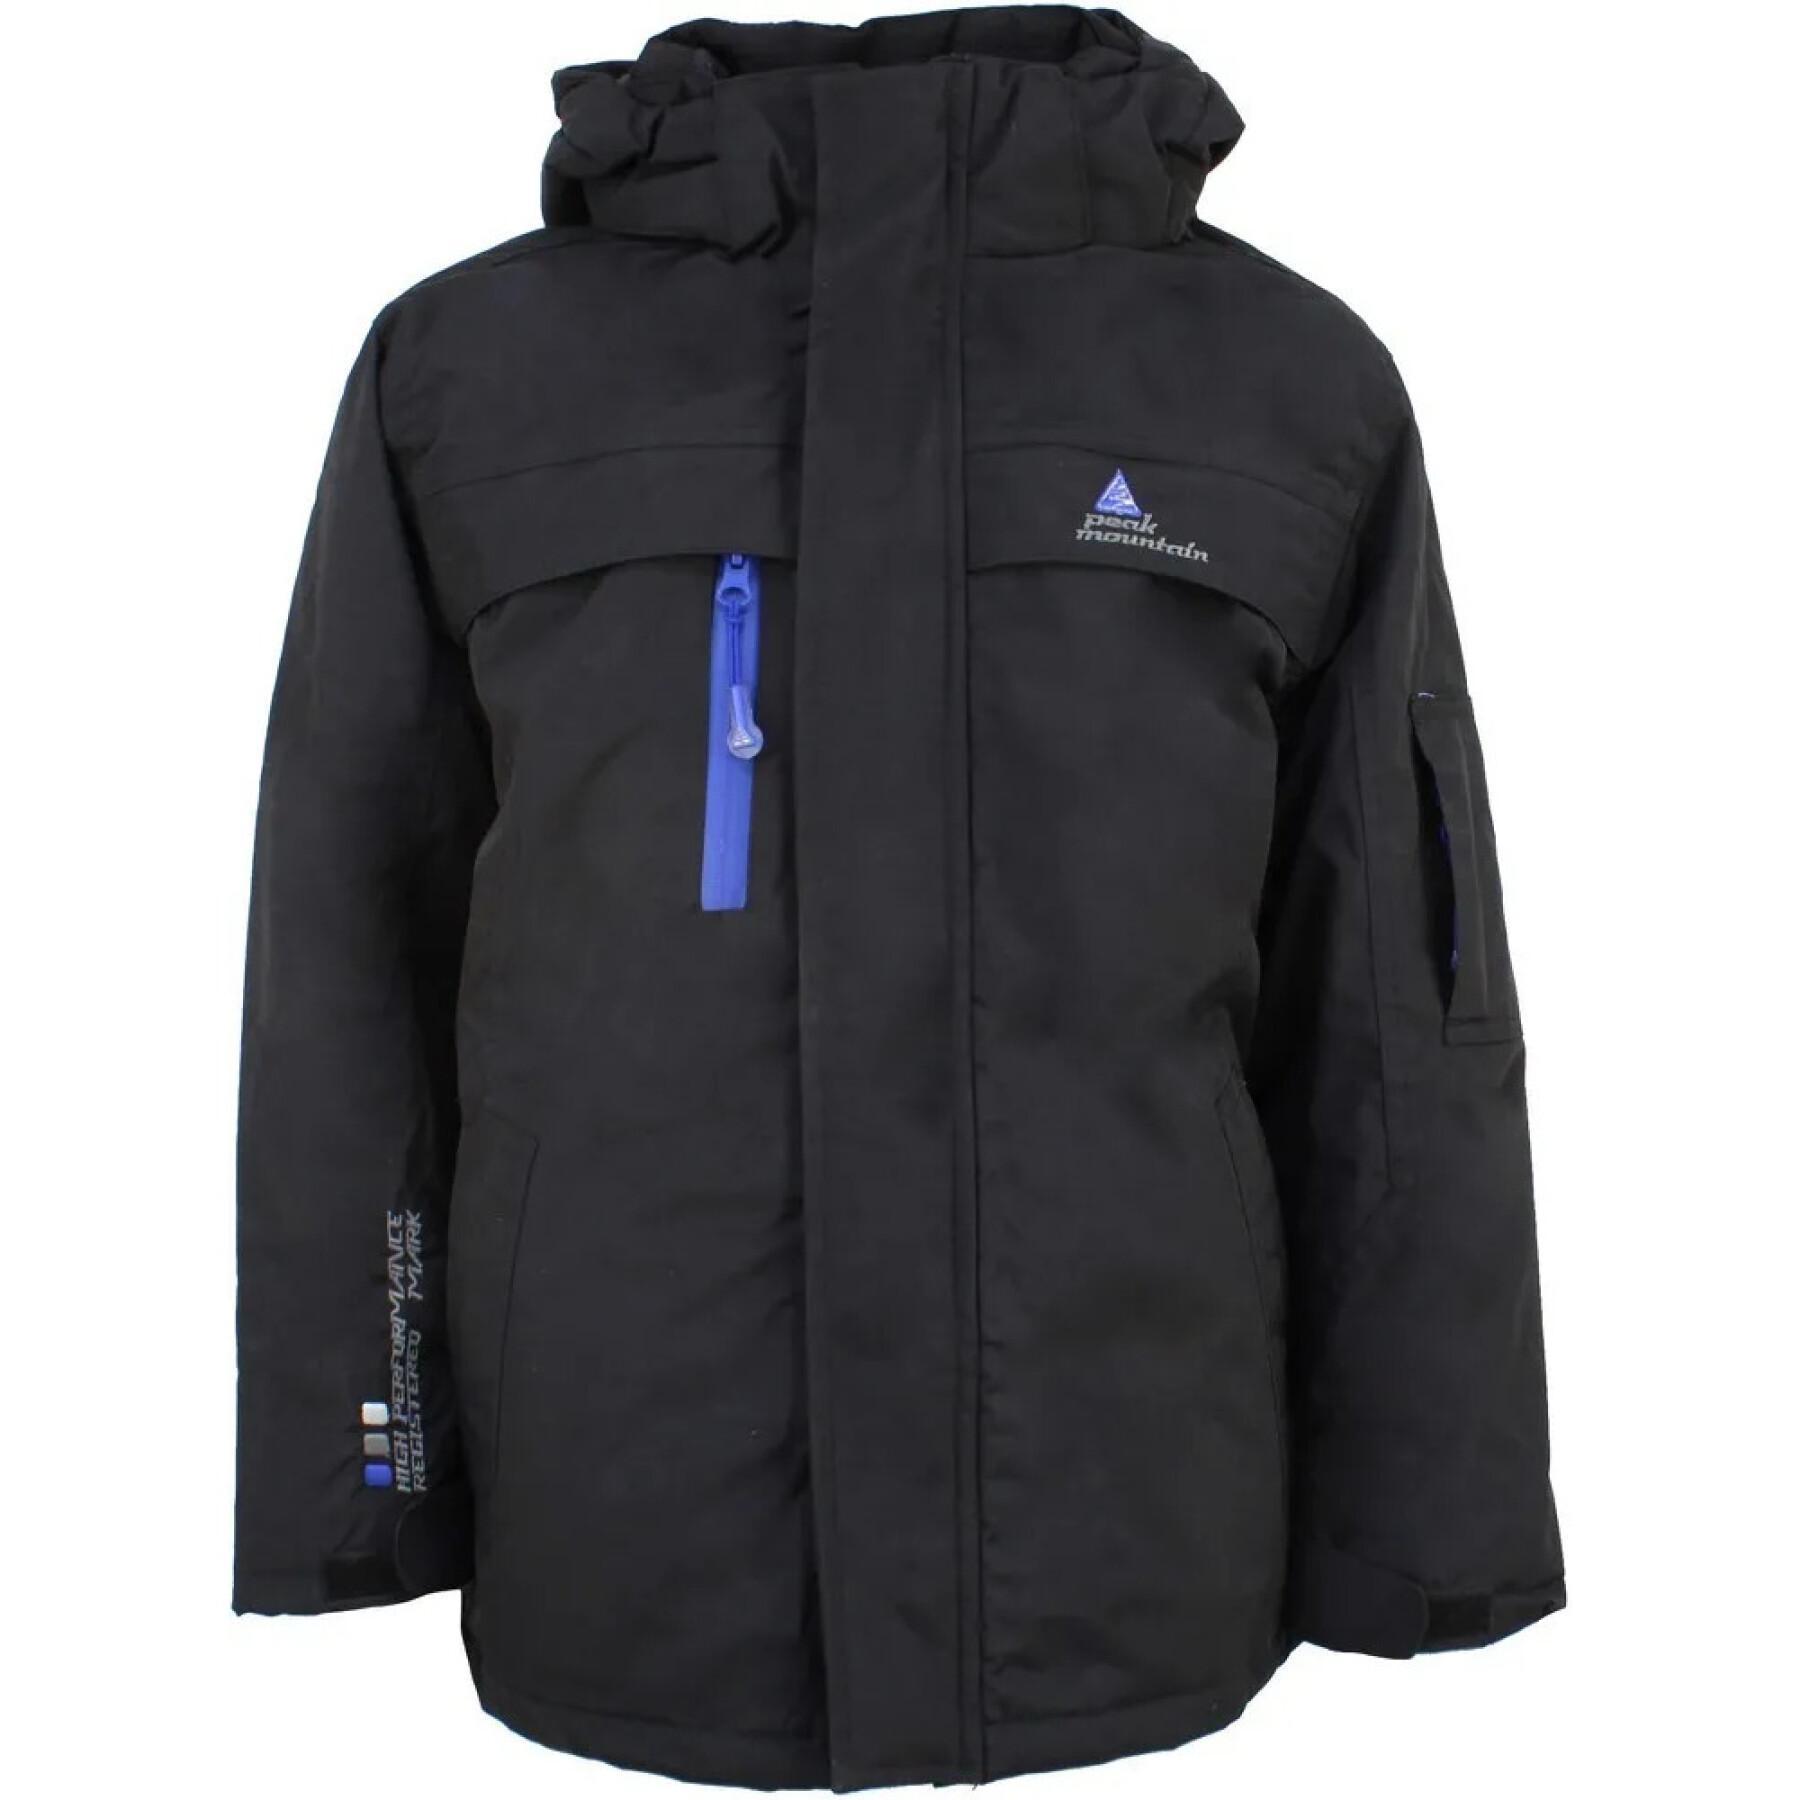 Children's parka Peak Mountain Ecadik - Softshell jackets - Kid's clothing  - Winter Sports